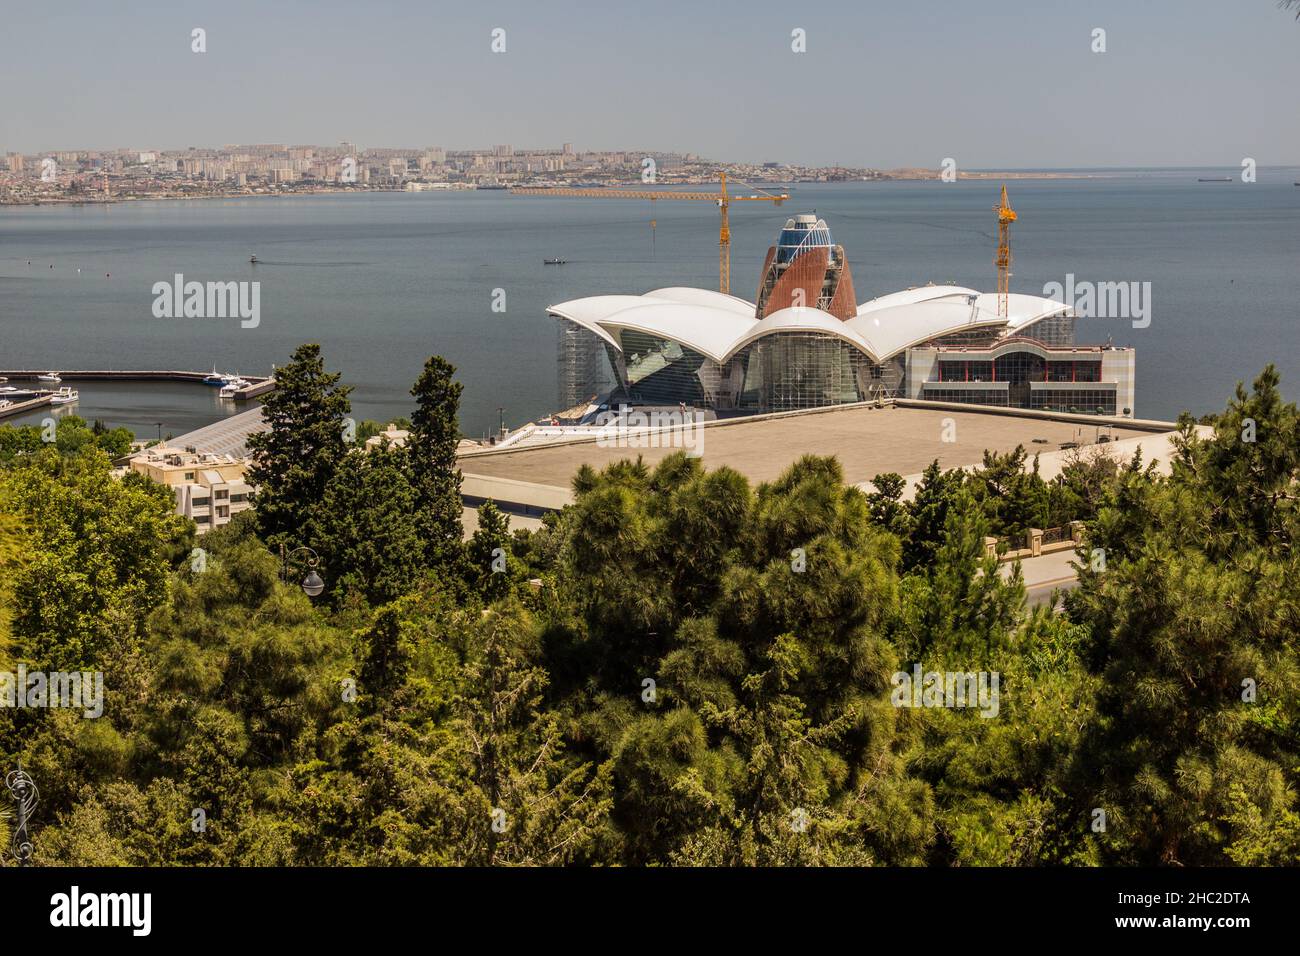 BAKÚ, AZERBAIYÁN - 20 DE JUNIO de 2018: Construcción del centro comercial Caspian Waterfront Mall en Bakú, Azerbaiyán Foto de stock